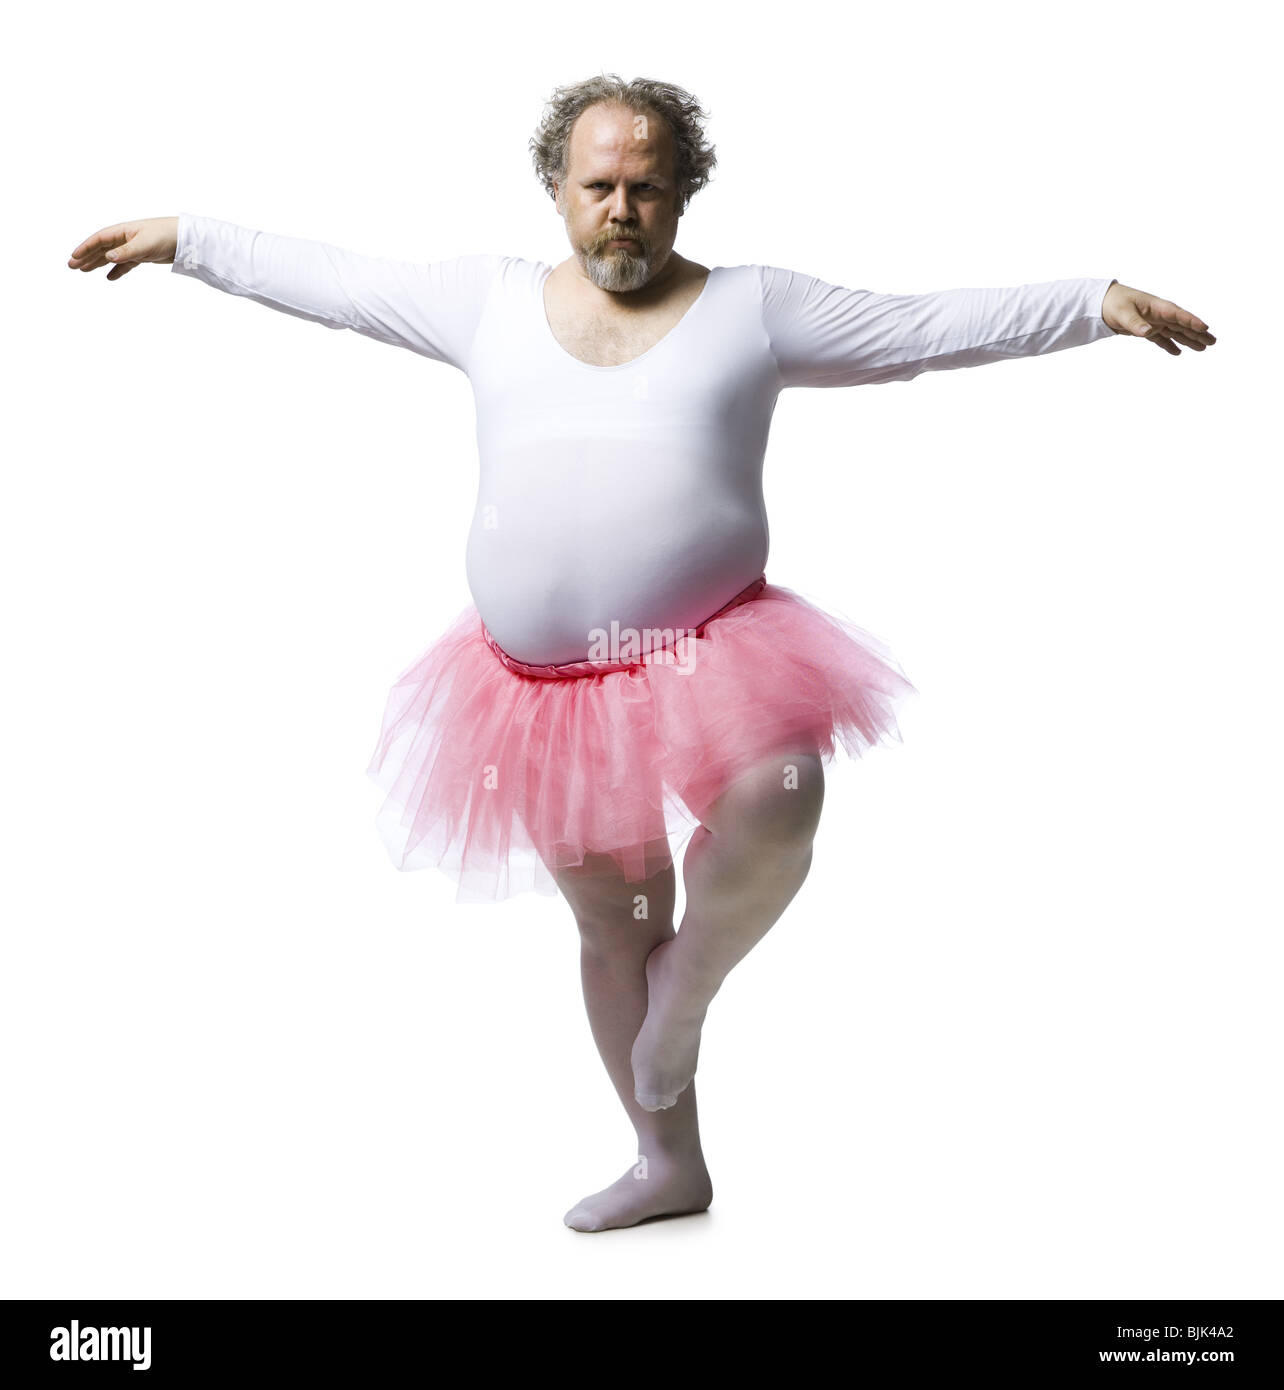 Obese man in tutu dancing Stock Photo - Alamy